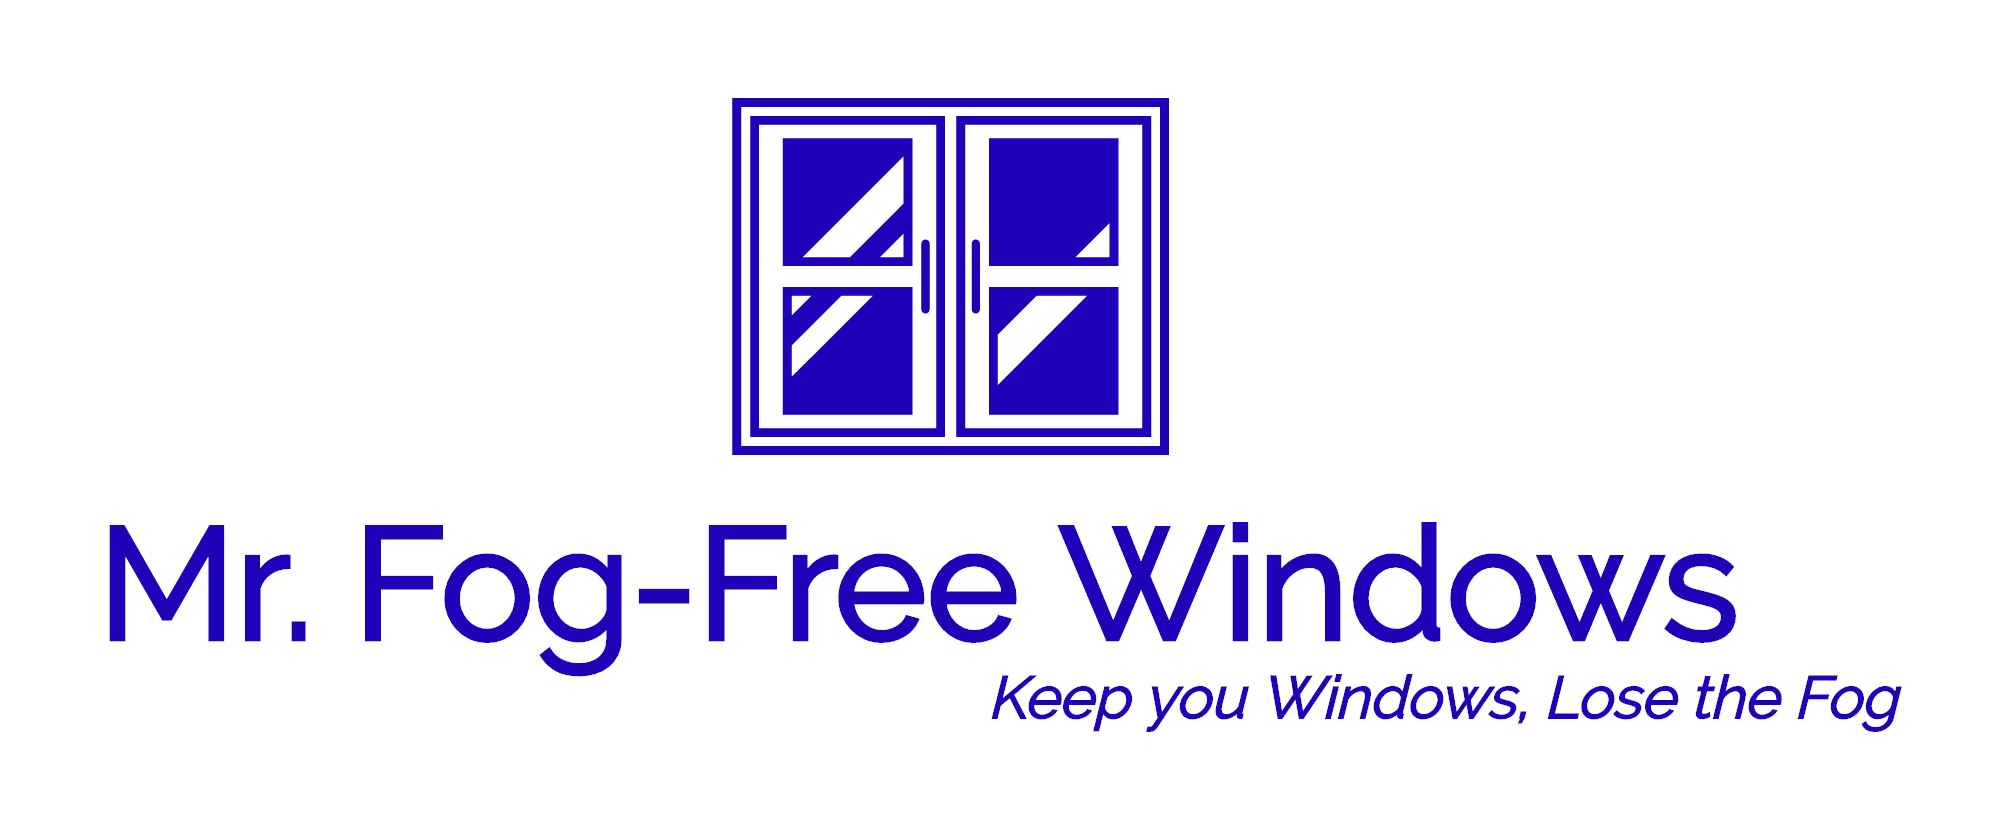 Mr. Fog-Free Windows